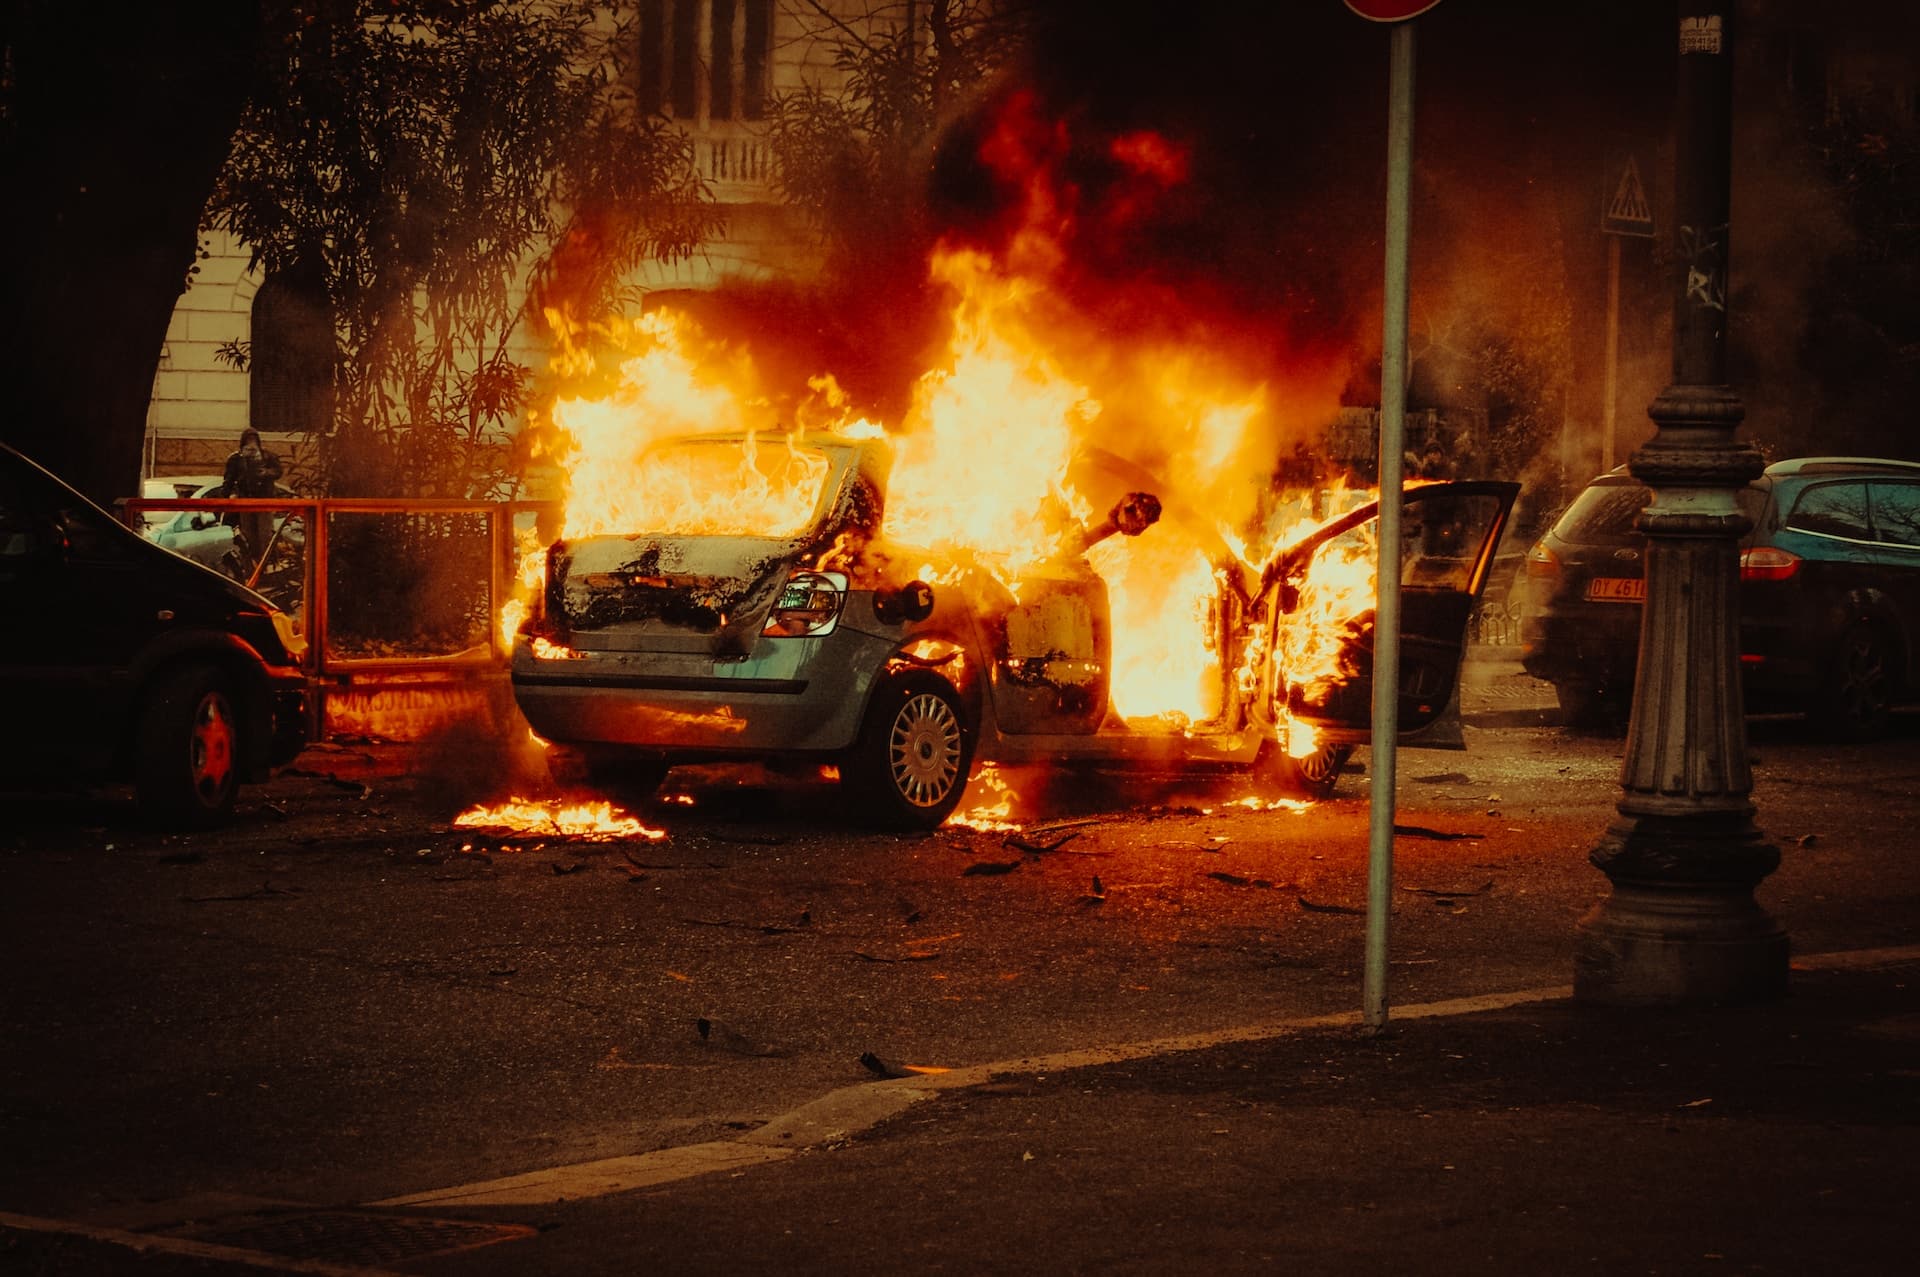 car on fire - domestic terrorism in arizona